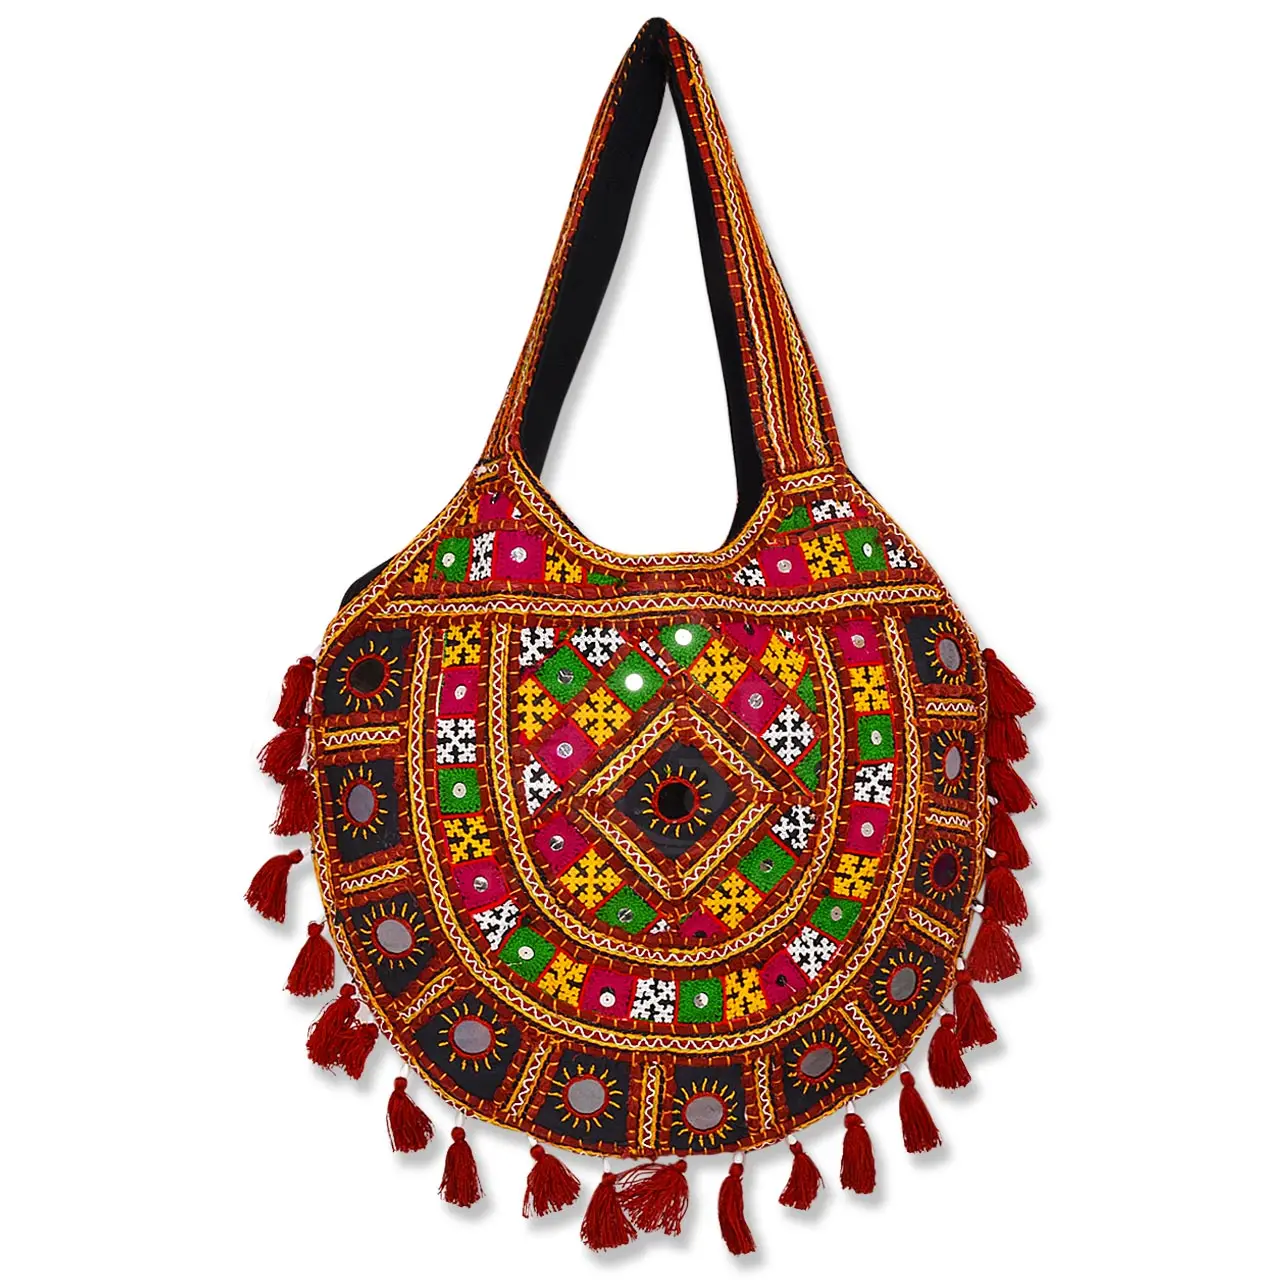 Rajasthani Art Bag Women's Satchel bag | 2pc set - Vasangini